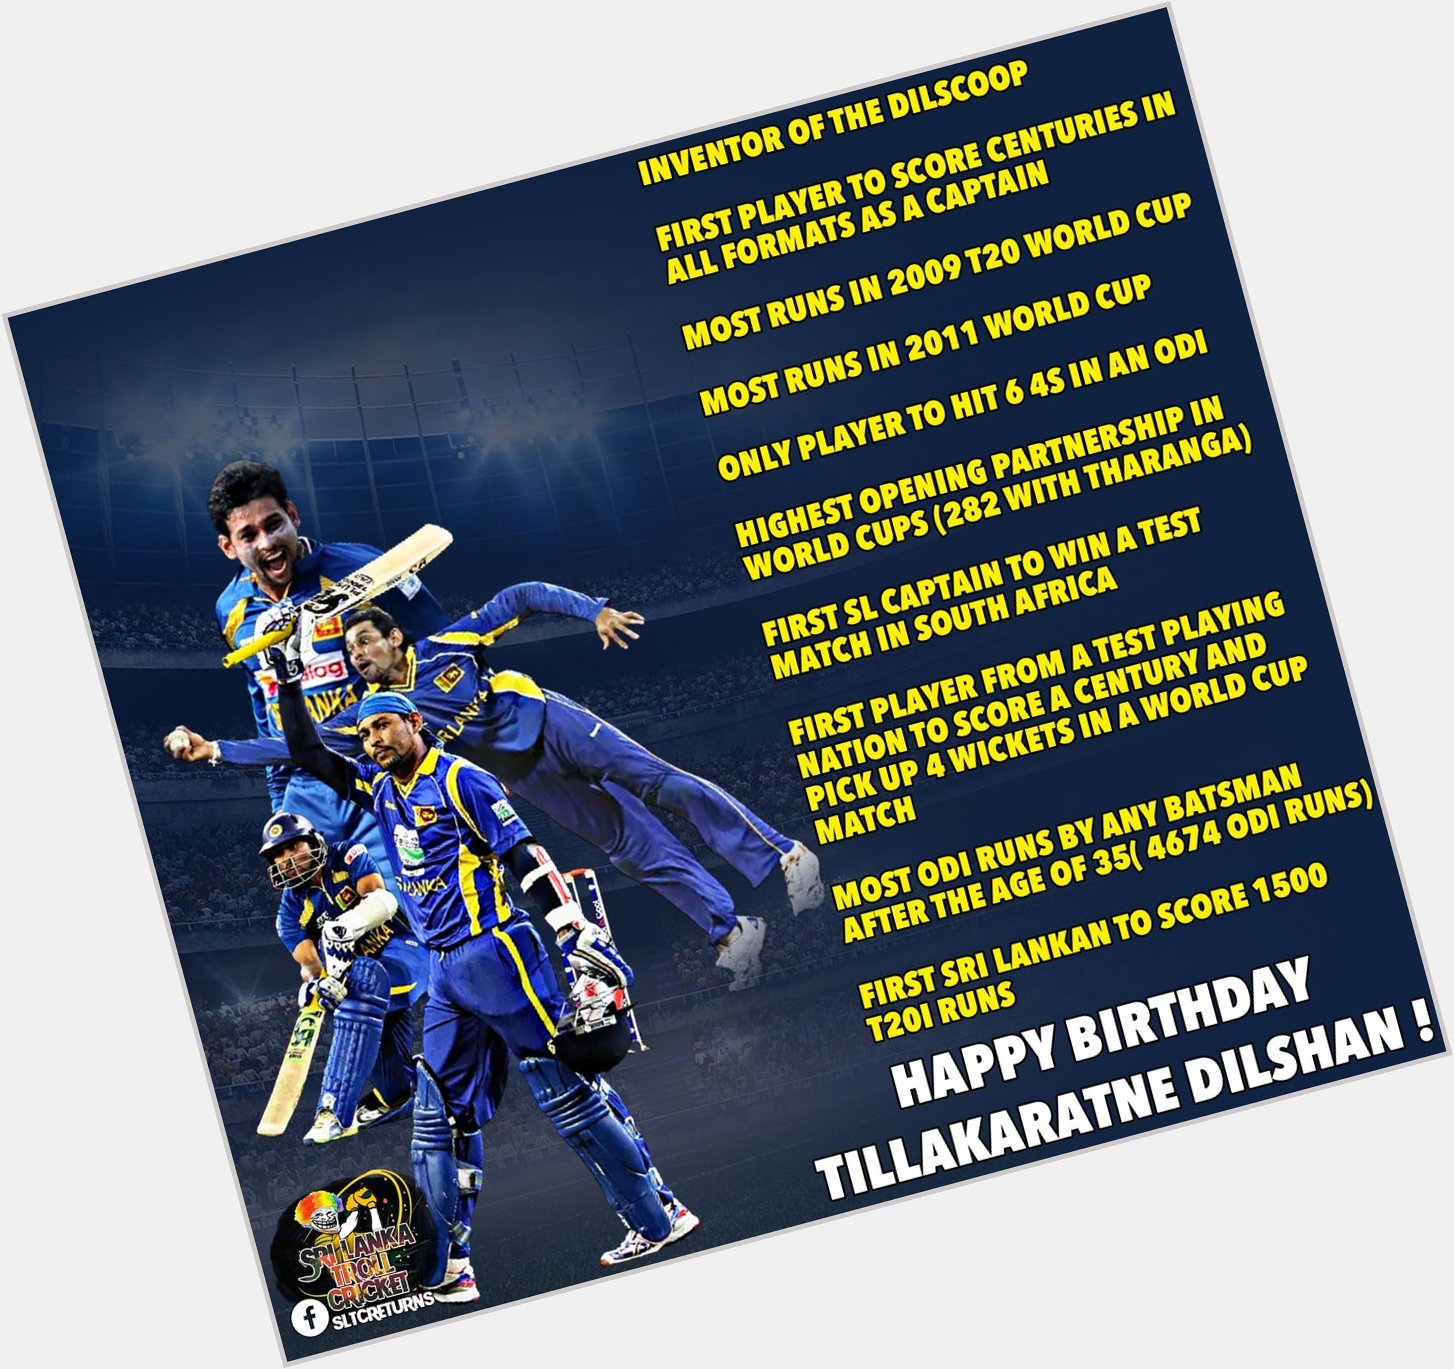 Uncrowned King of Sri Lankan Cricket. Happy Birthday Tillakaratne Dilshan !!!  